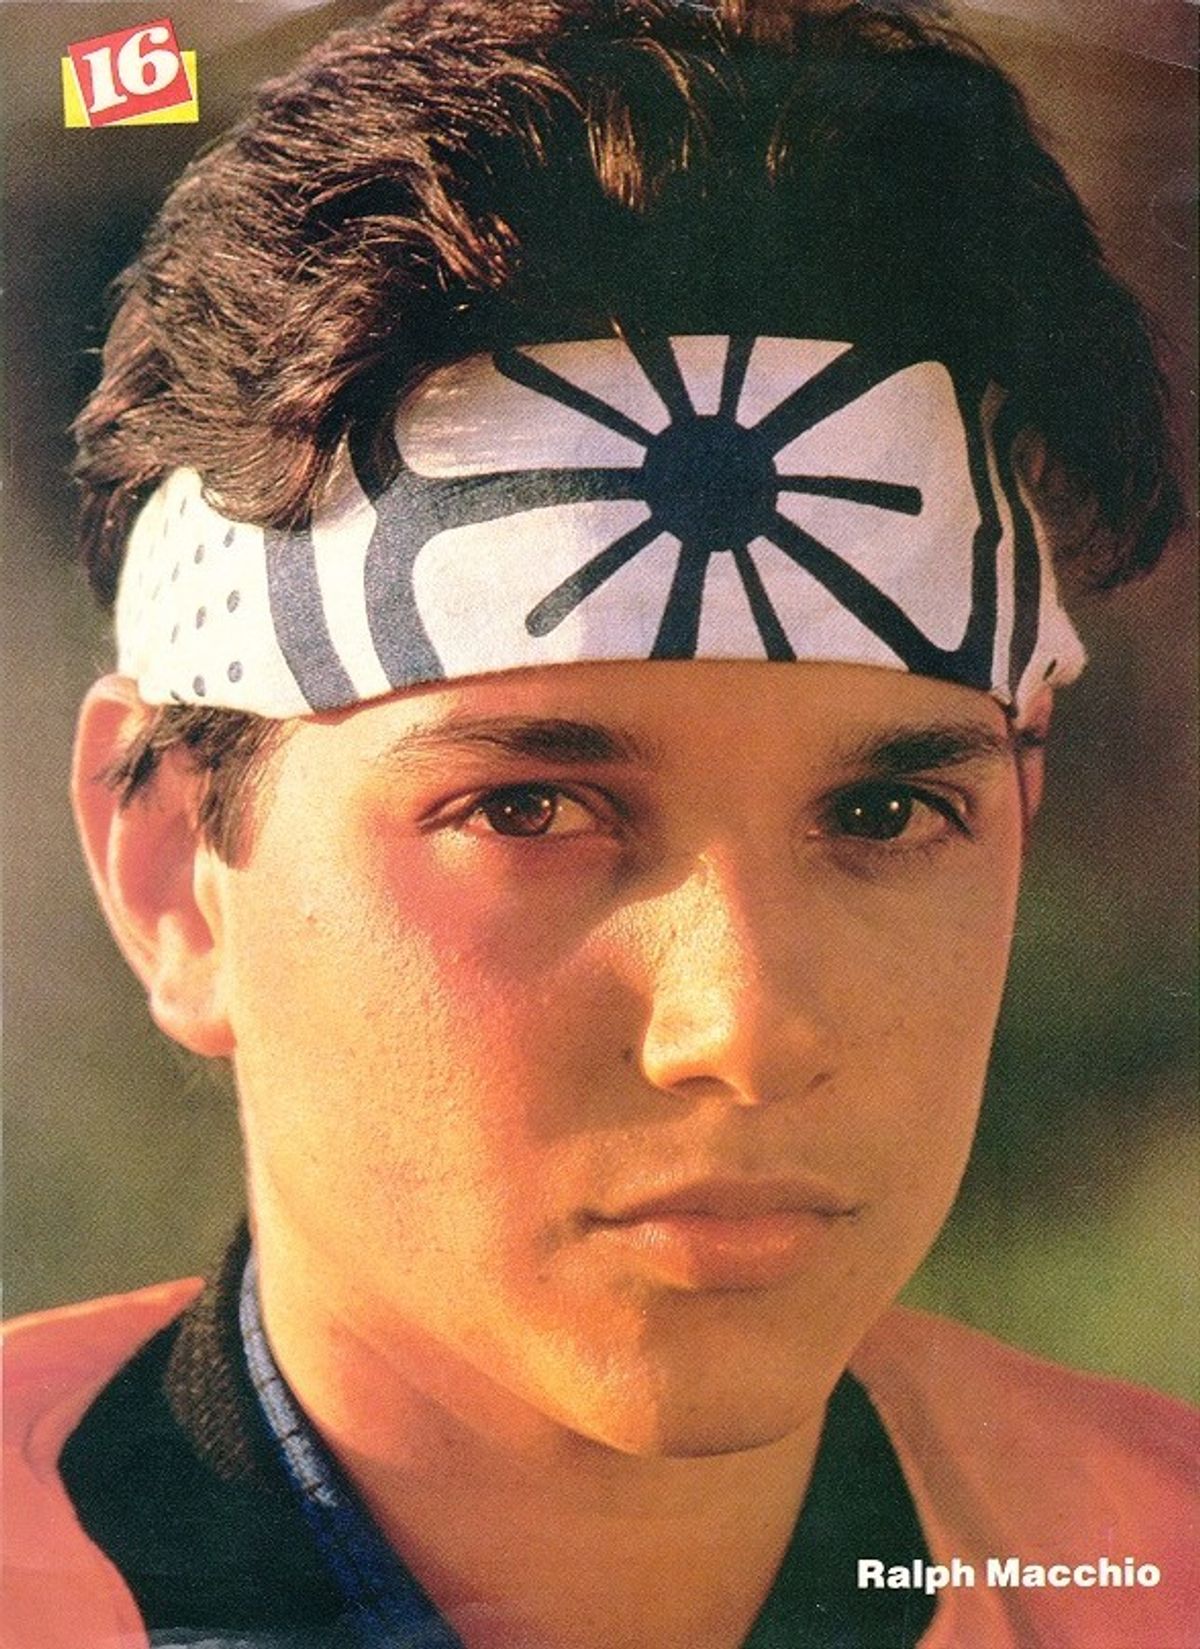 Ralph Macchio in the original "Karate Kid."